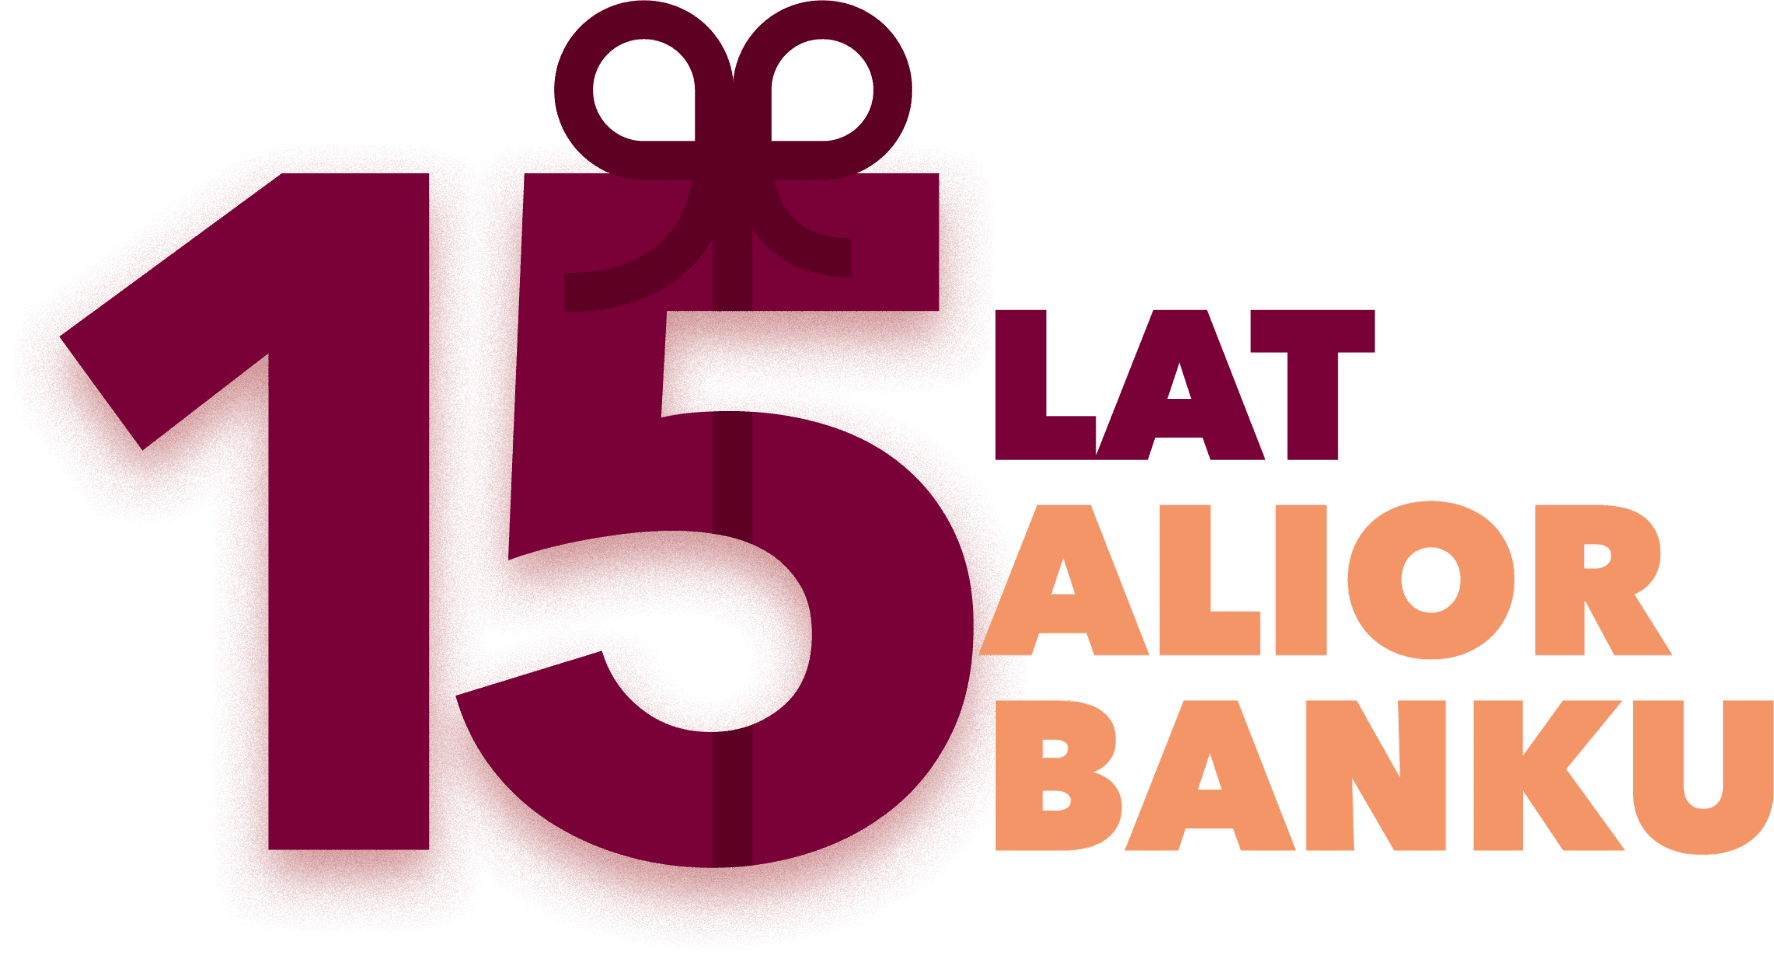 15 Lat Alior Banku